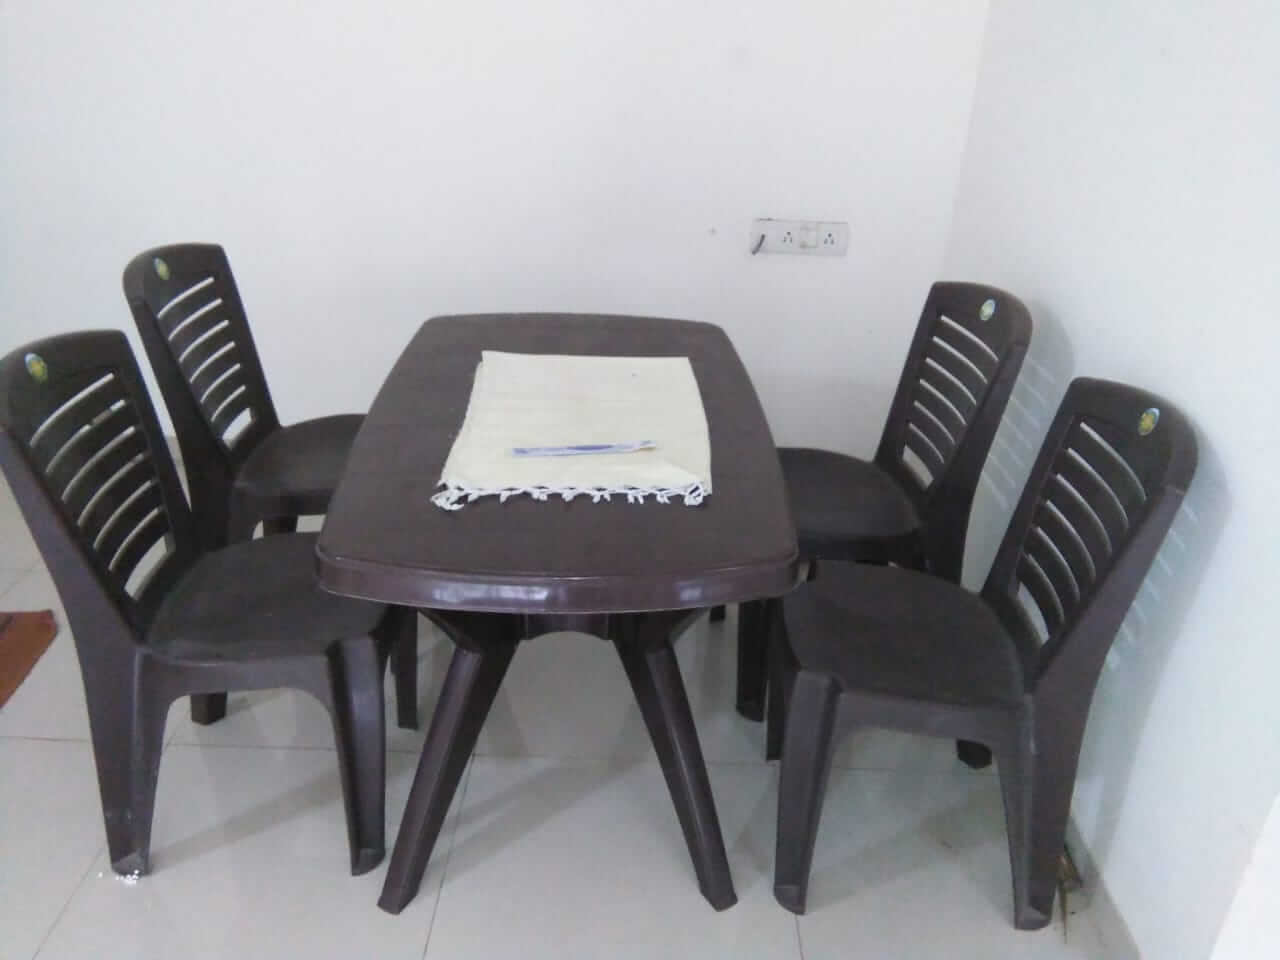 2 BHK Apartment / Flat for Rent 1080 Sq. Feet at Pune, Hinjewadi